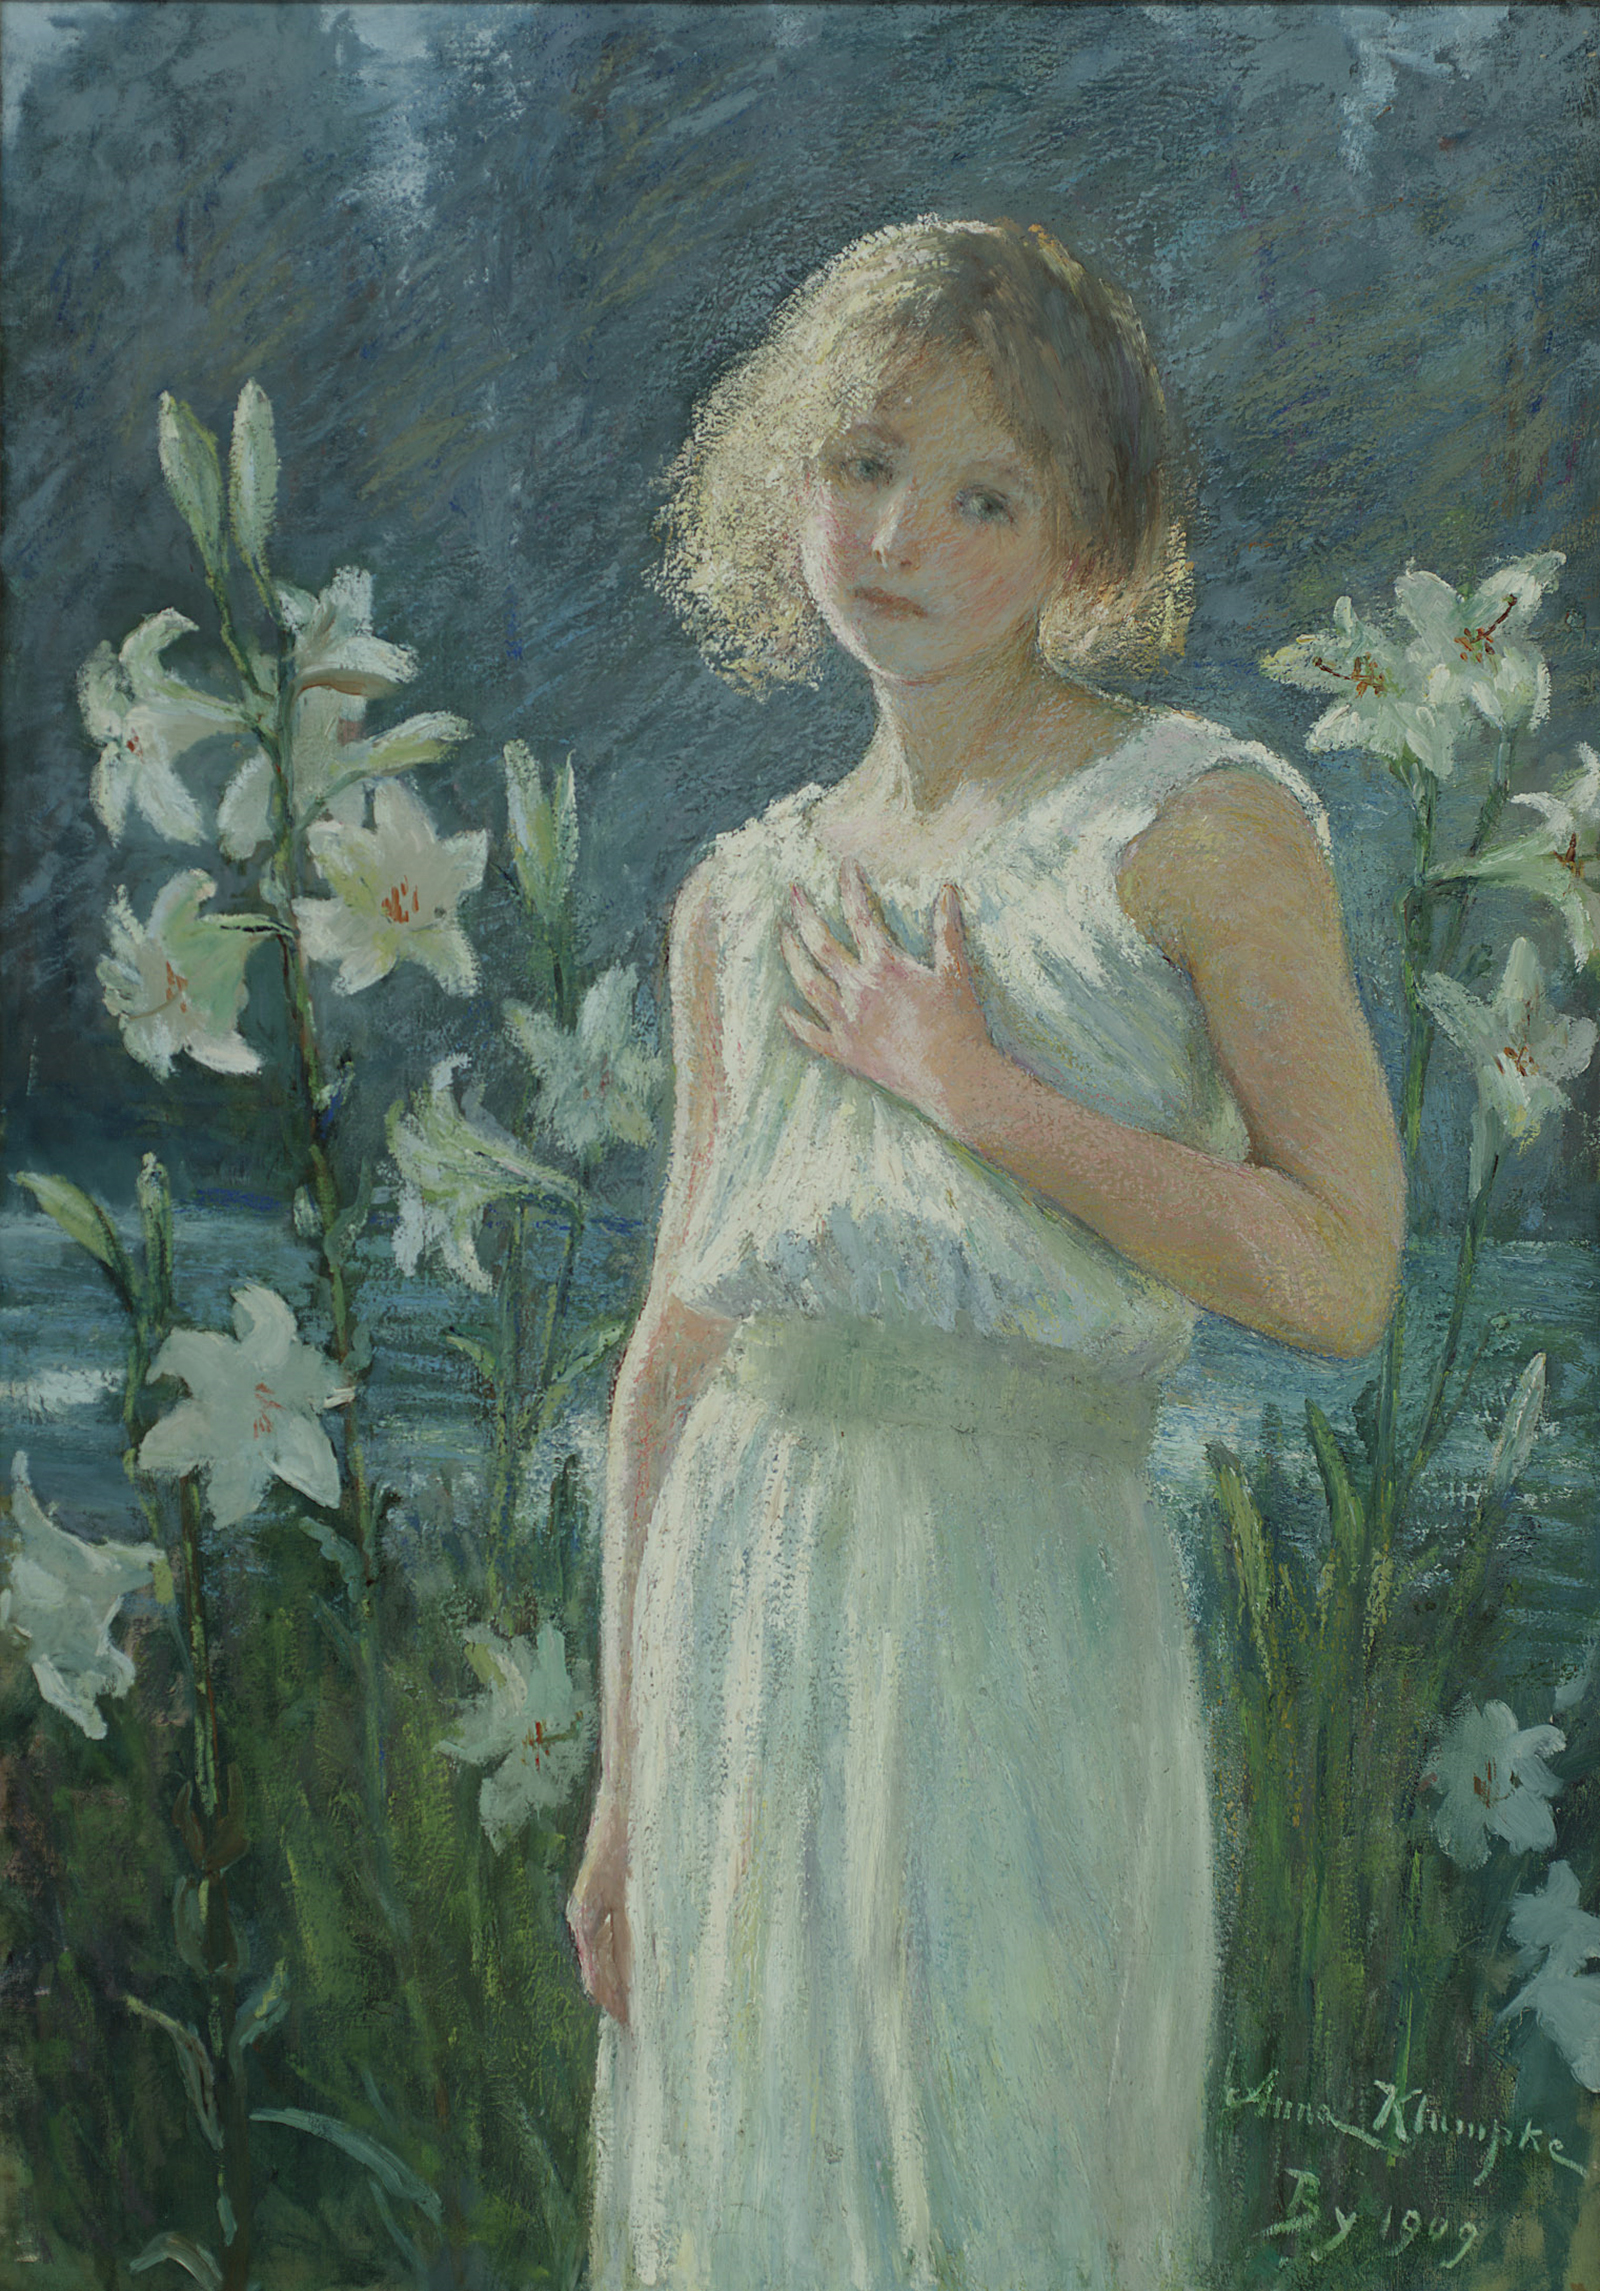 Among the Lilies by Anna Elizabeth Klumpke